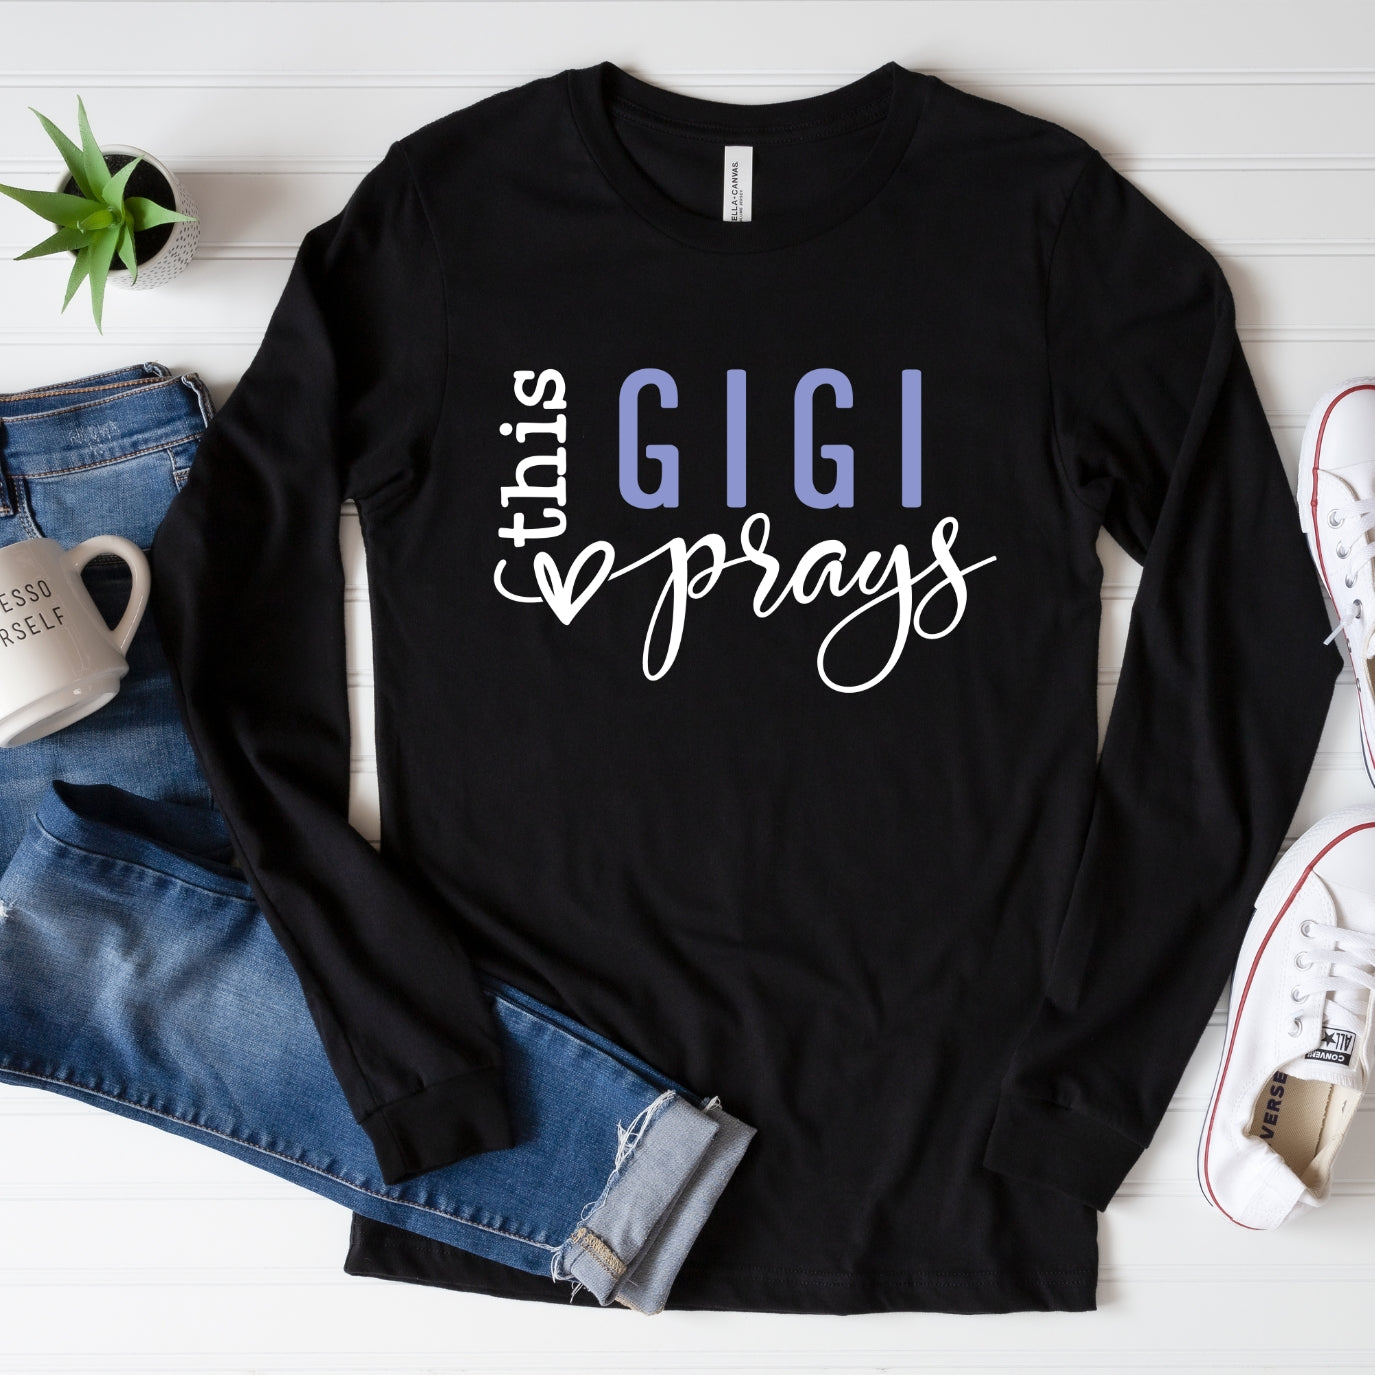 This GiGi Prays Women's Long Sleeve Shirt